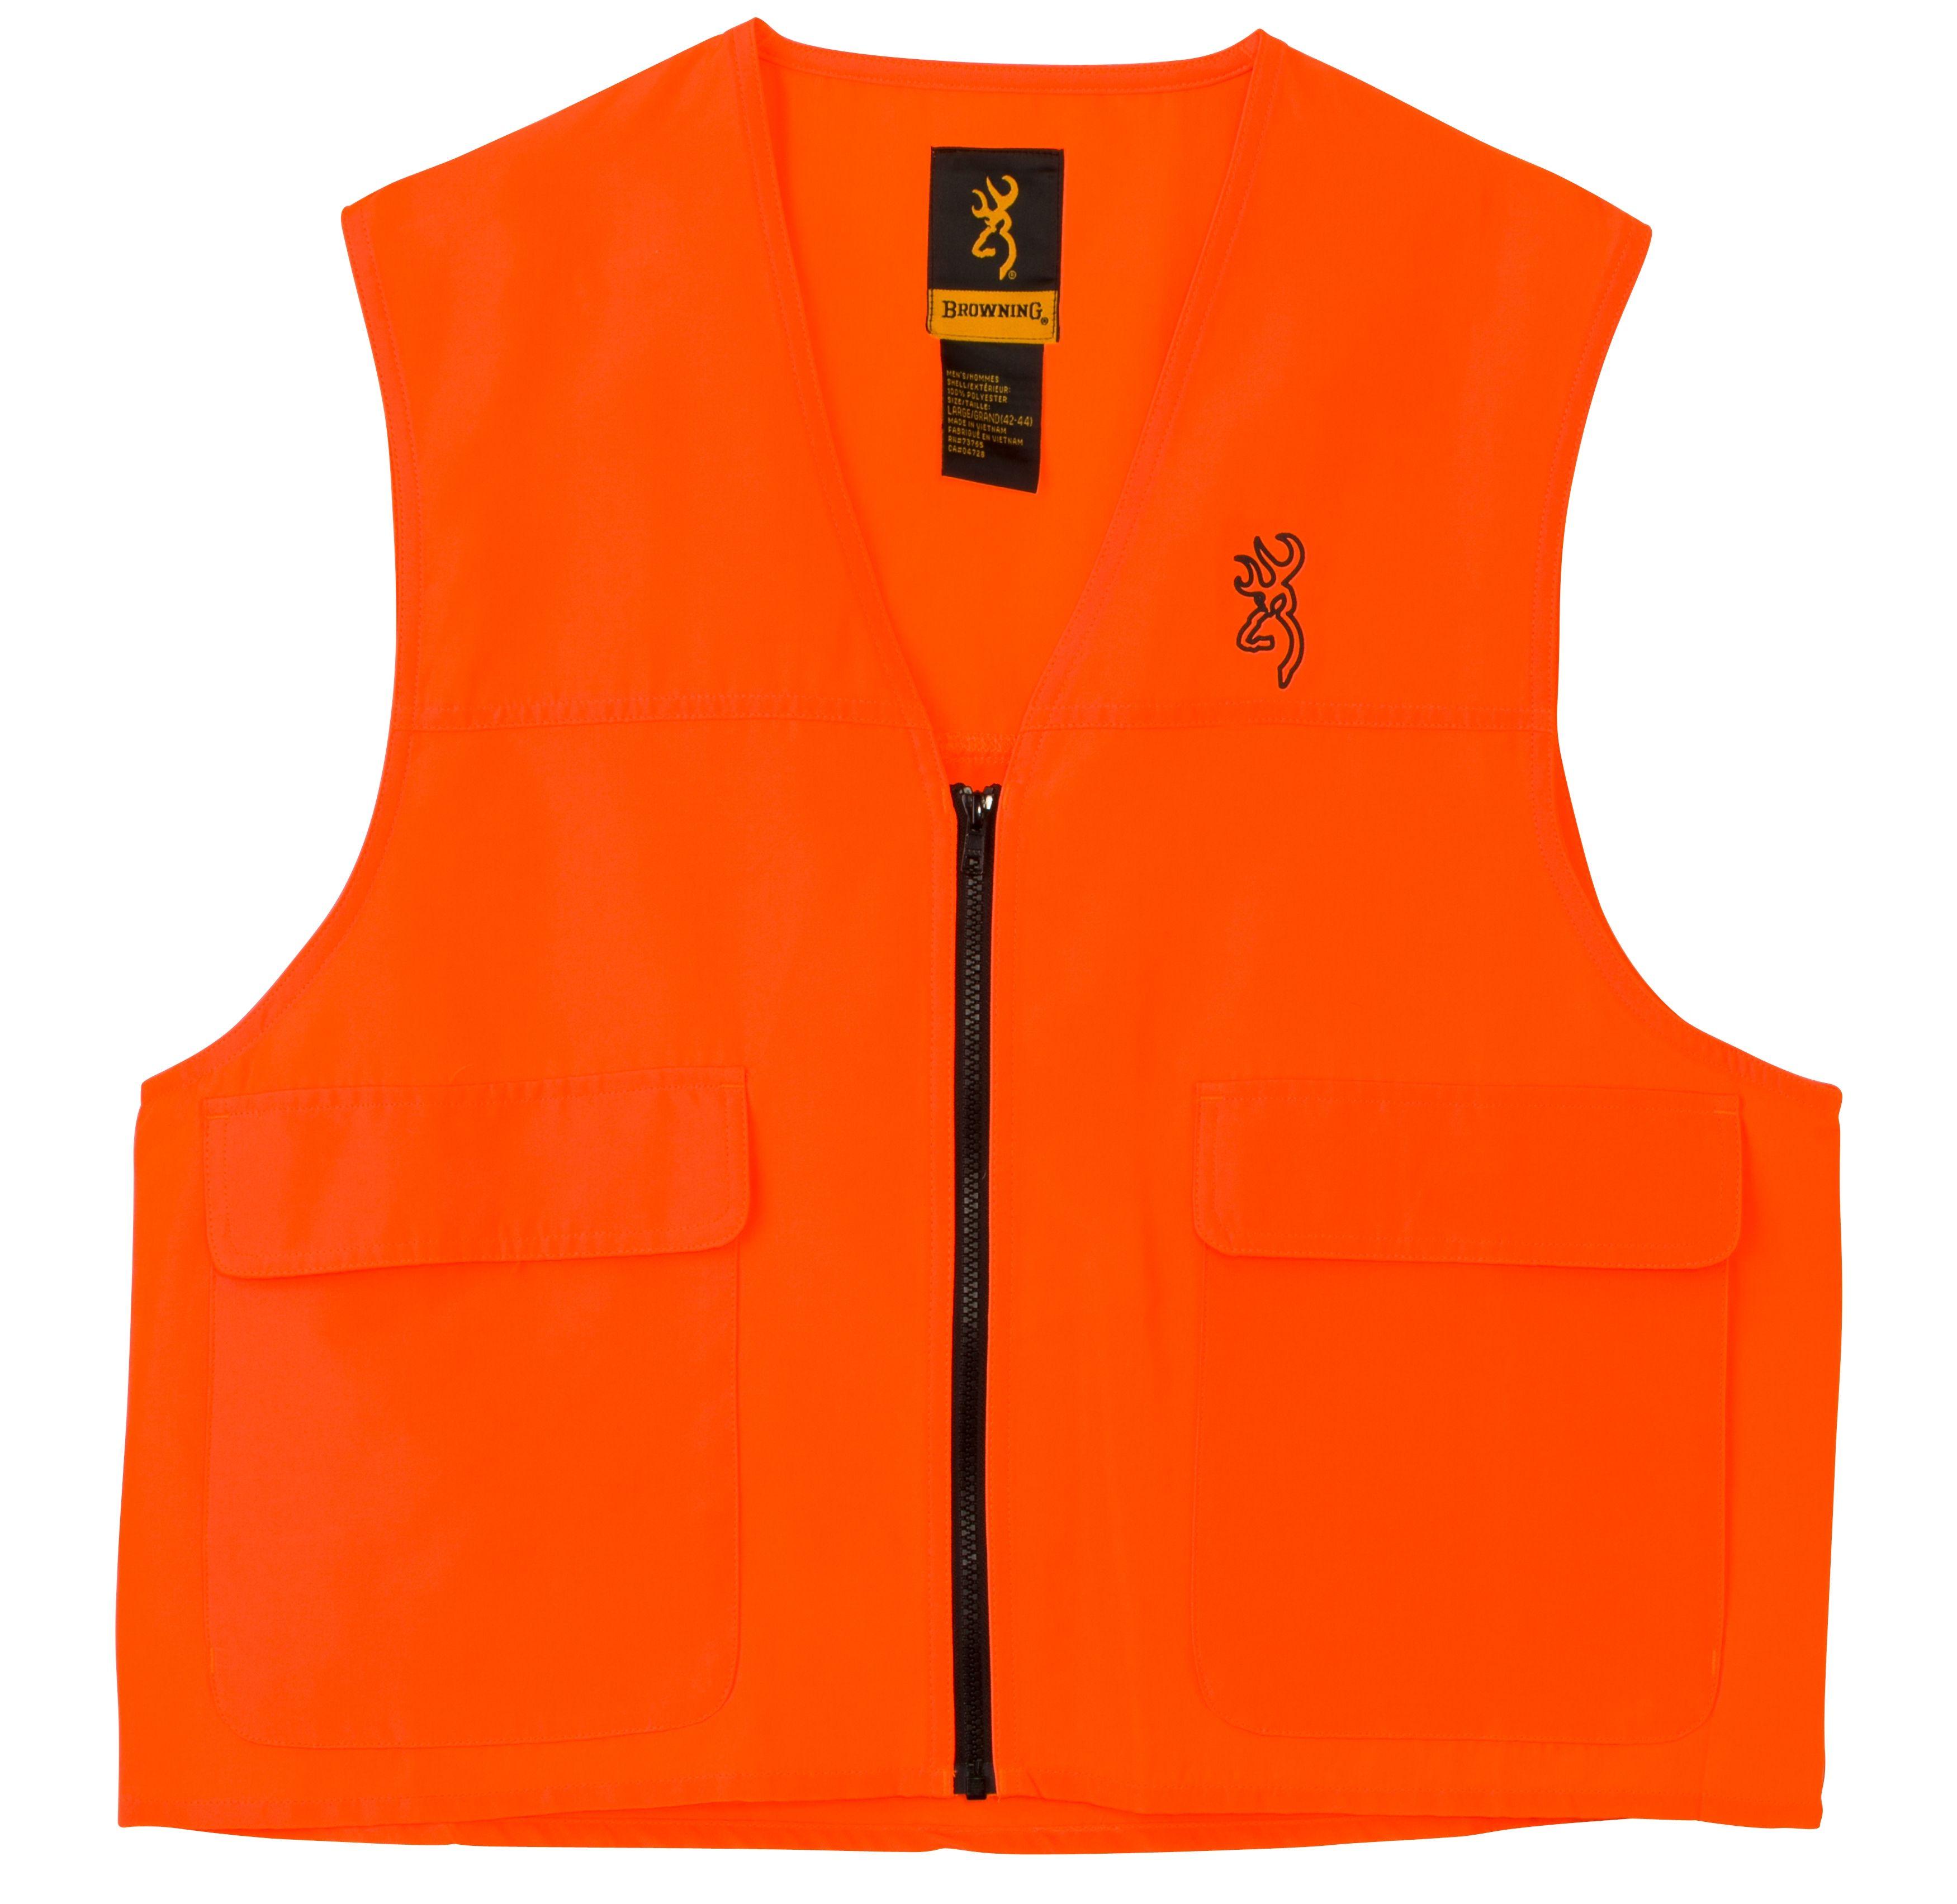 Large Orange Browning Logo - Browning Safety Blaze Overlay Hunting Vest-Blaze Orange-Large ...